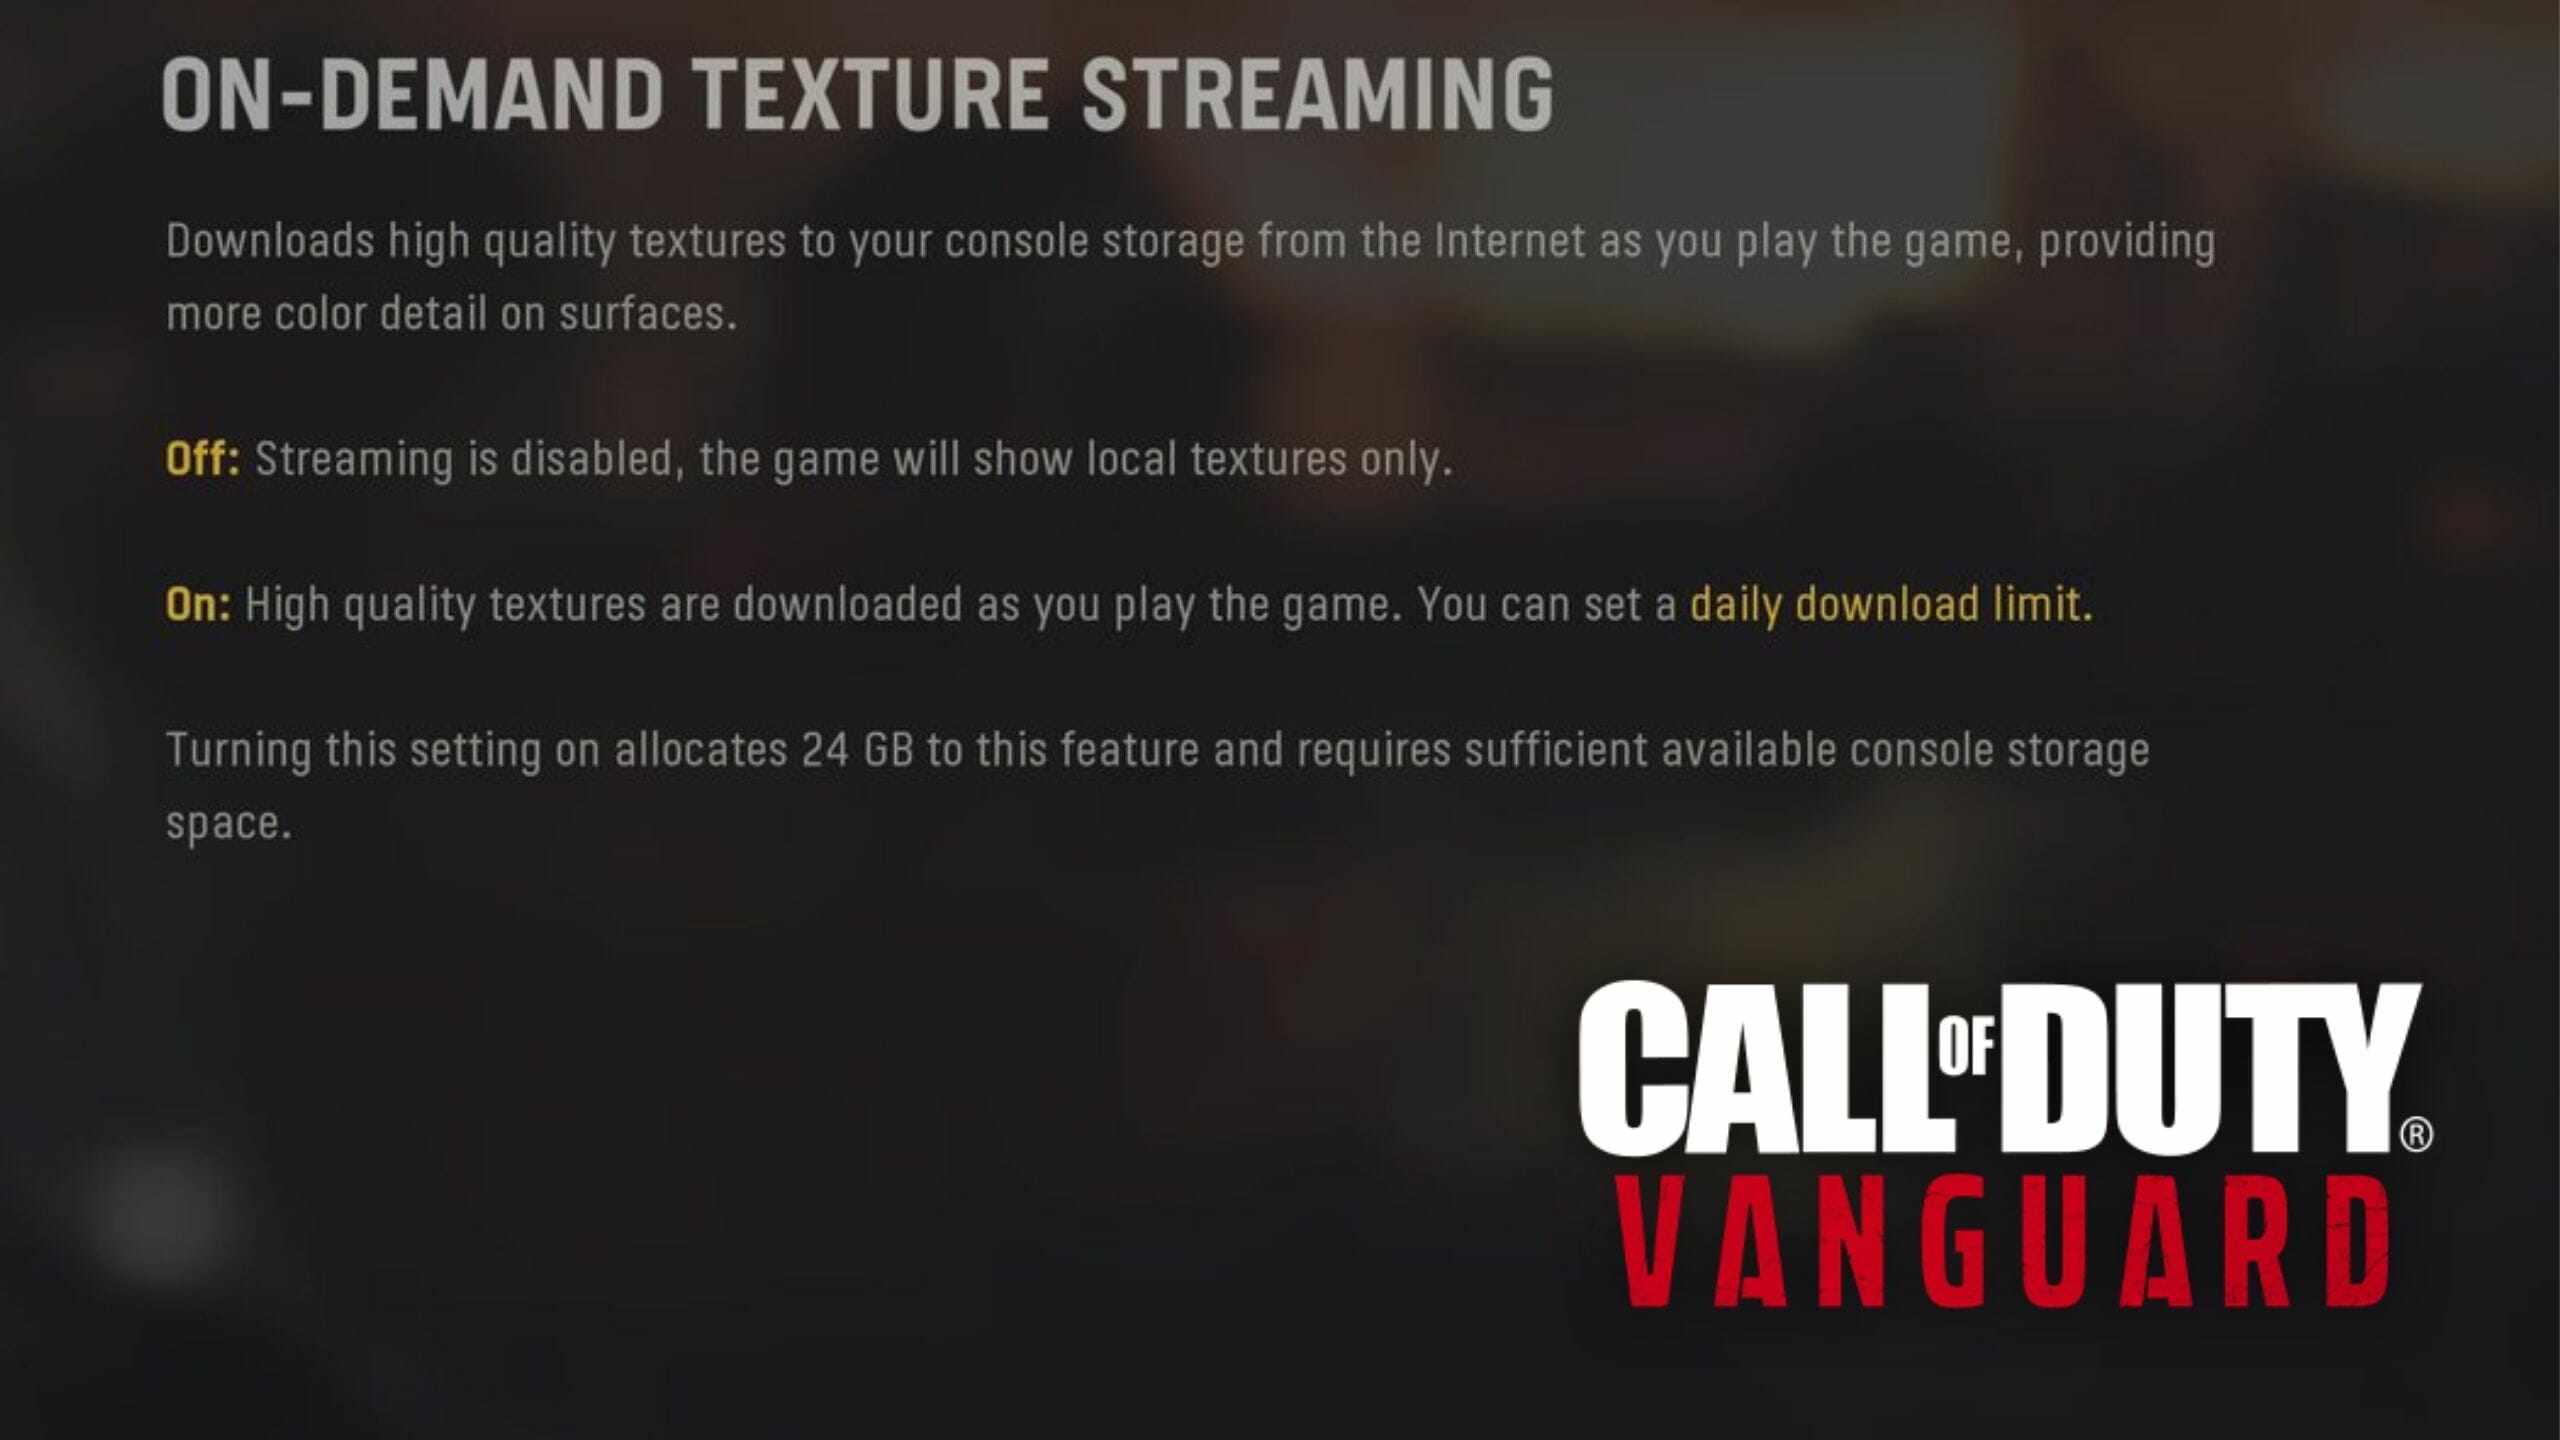 vanguard on demand texture streaming